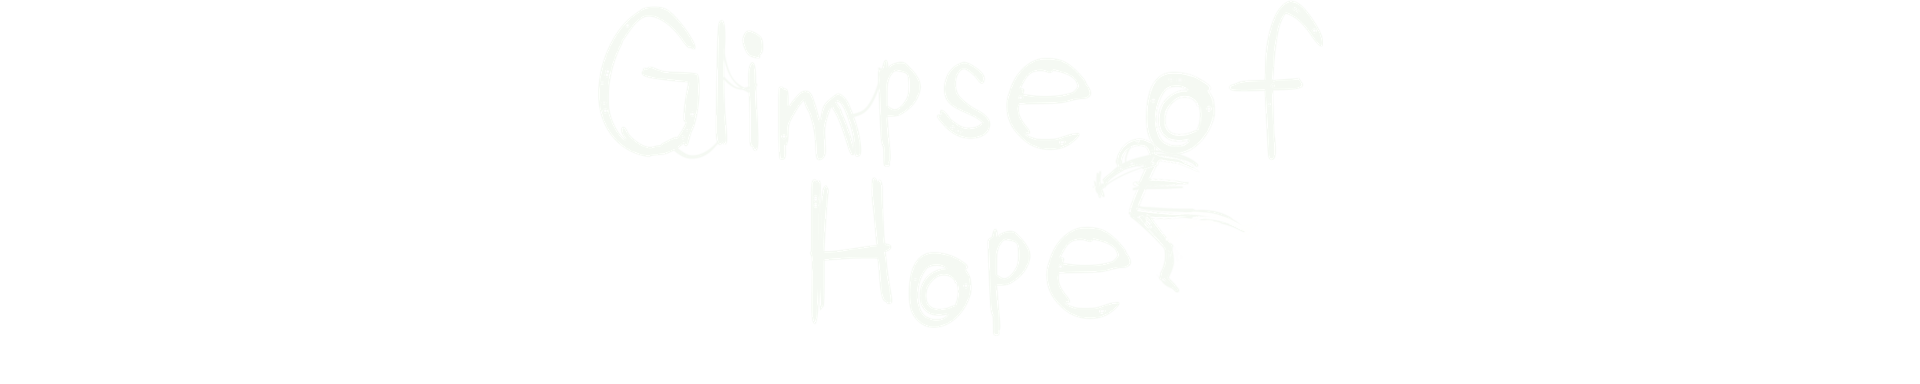 Glimpse of hope